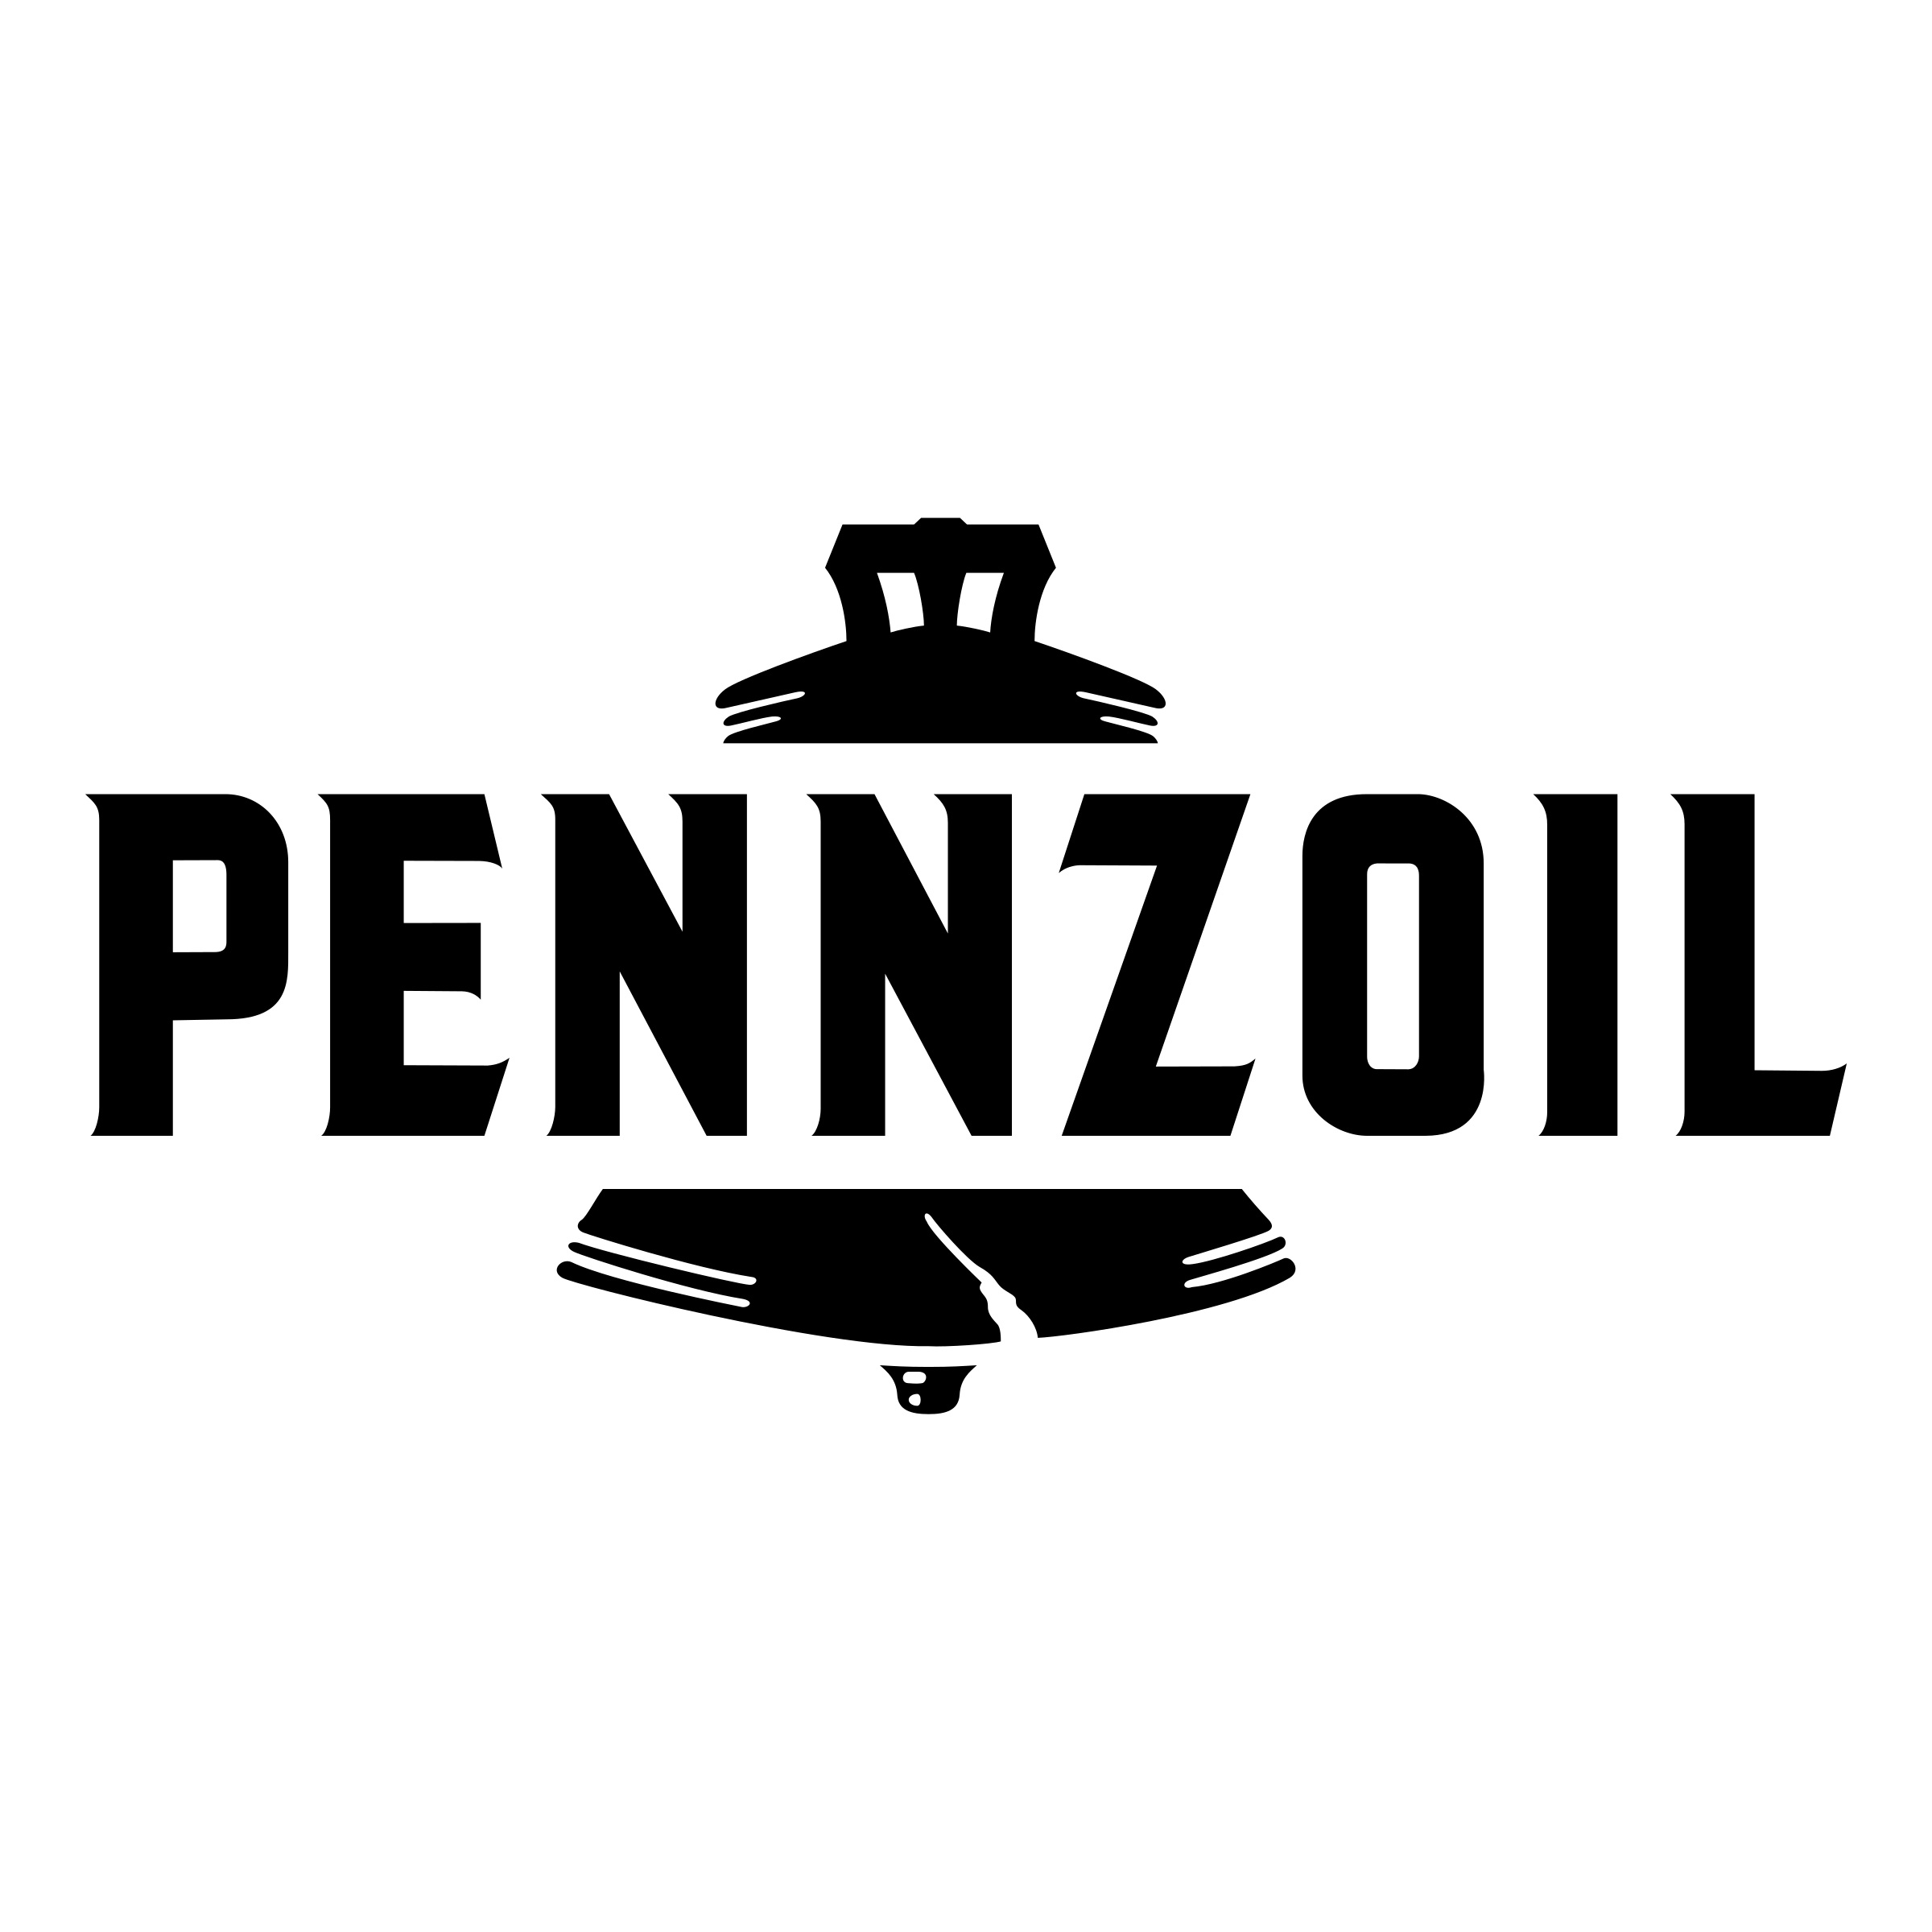 Pensoil Logo - Pennzoil Logo PNG Transparent & SVG Vector - Freebie Supply